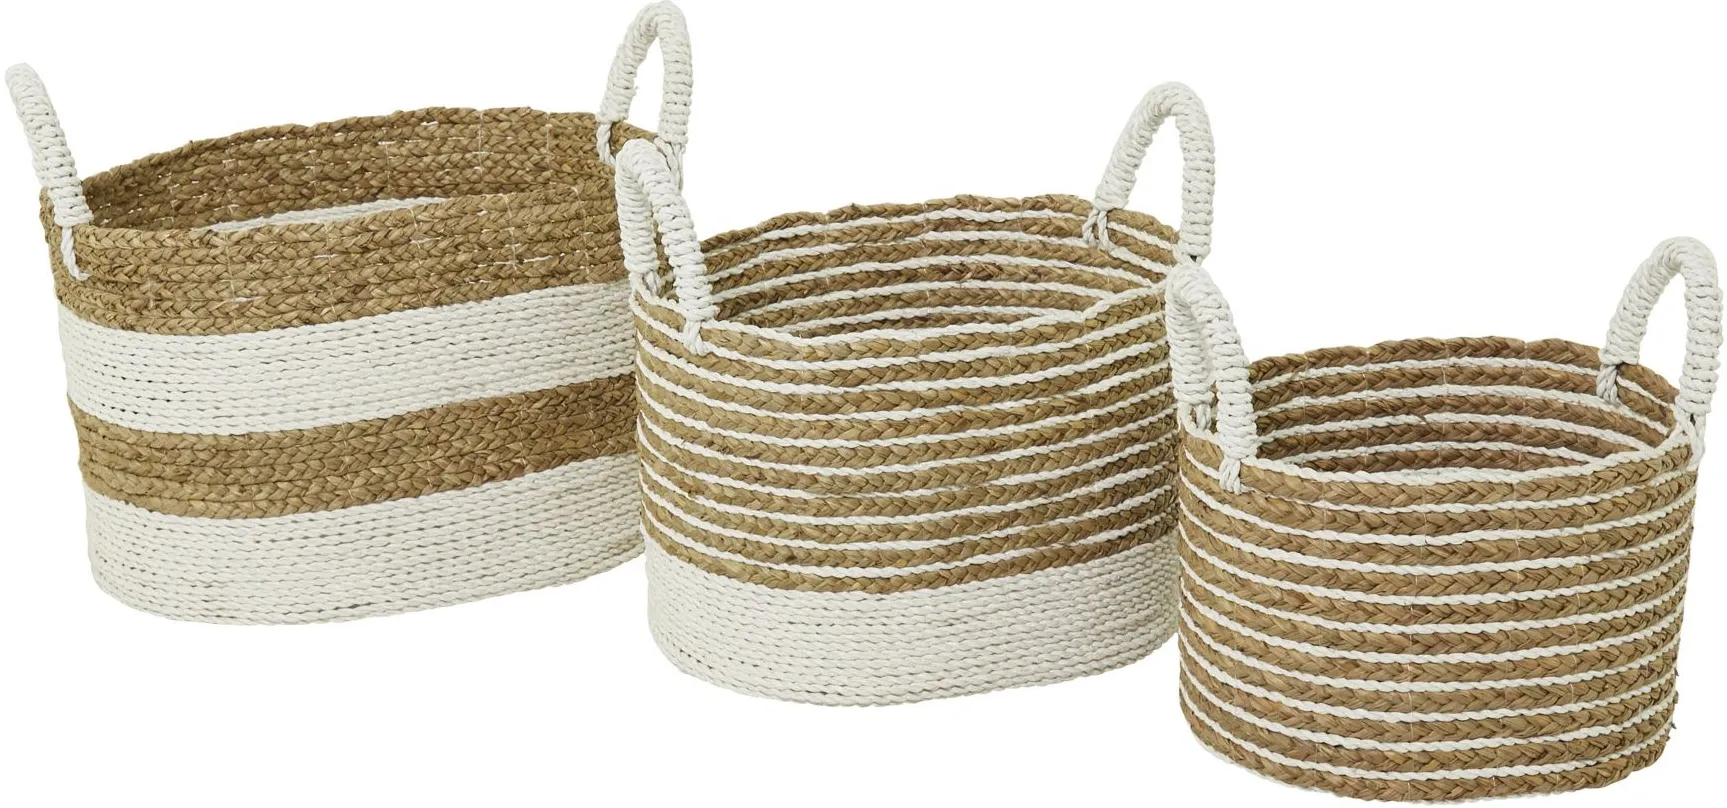 Ivy Collection Storage Basket - Set of 3 in Brown by UMA Enterprises